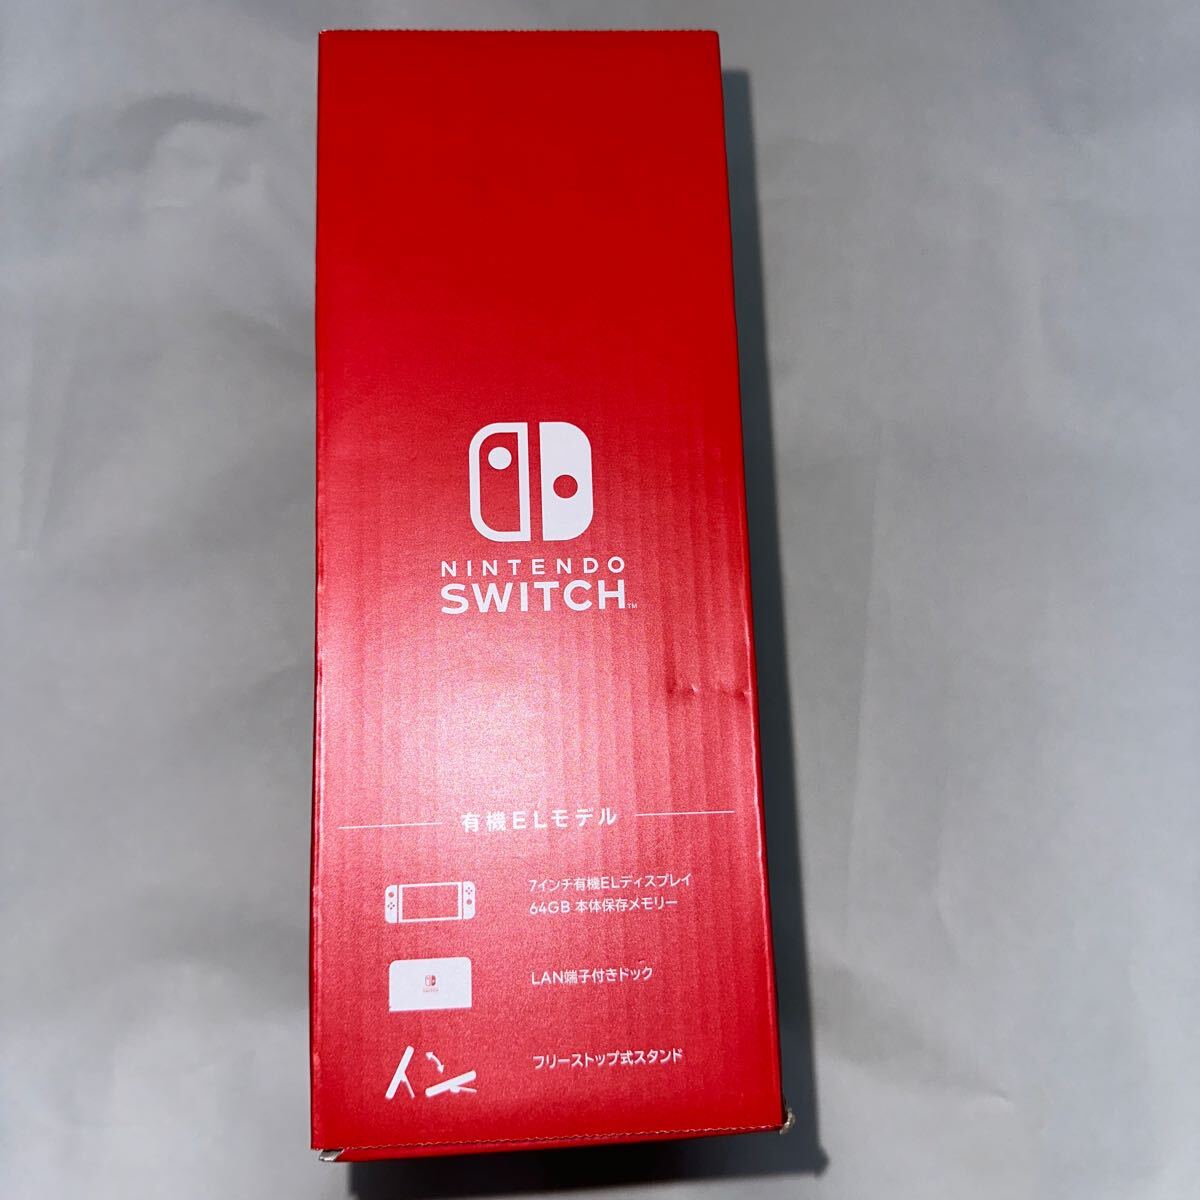 Nintendo Switch Nintendo switch body ( have machine EL model ) Mario red [ new goods * unopened ] free shipping 1 jpy start nintendo 